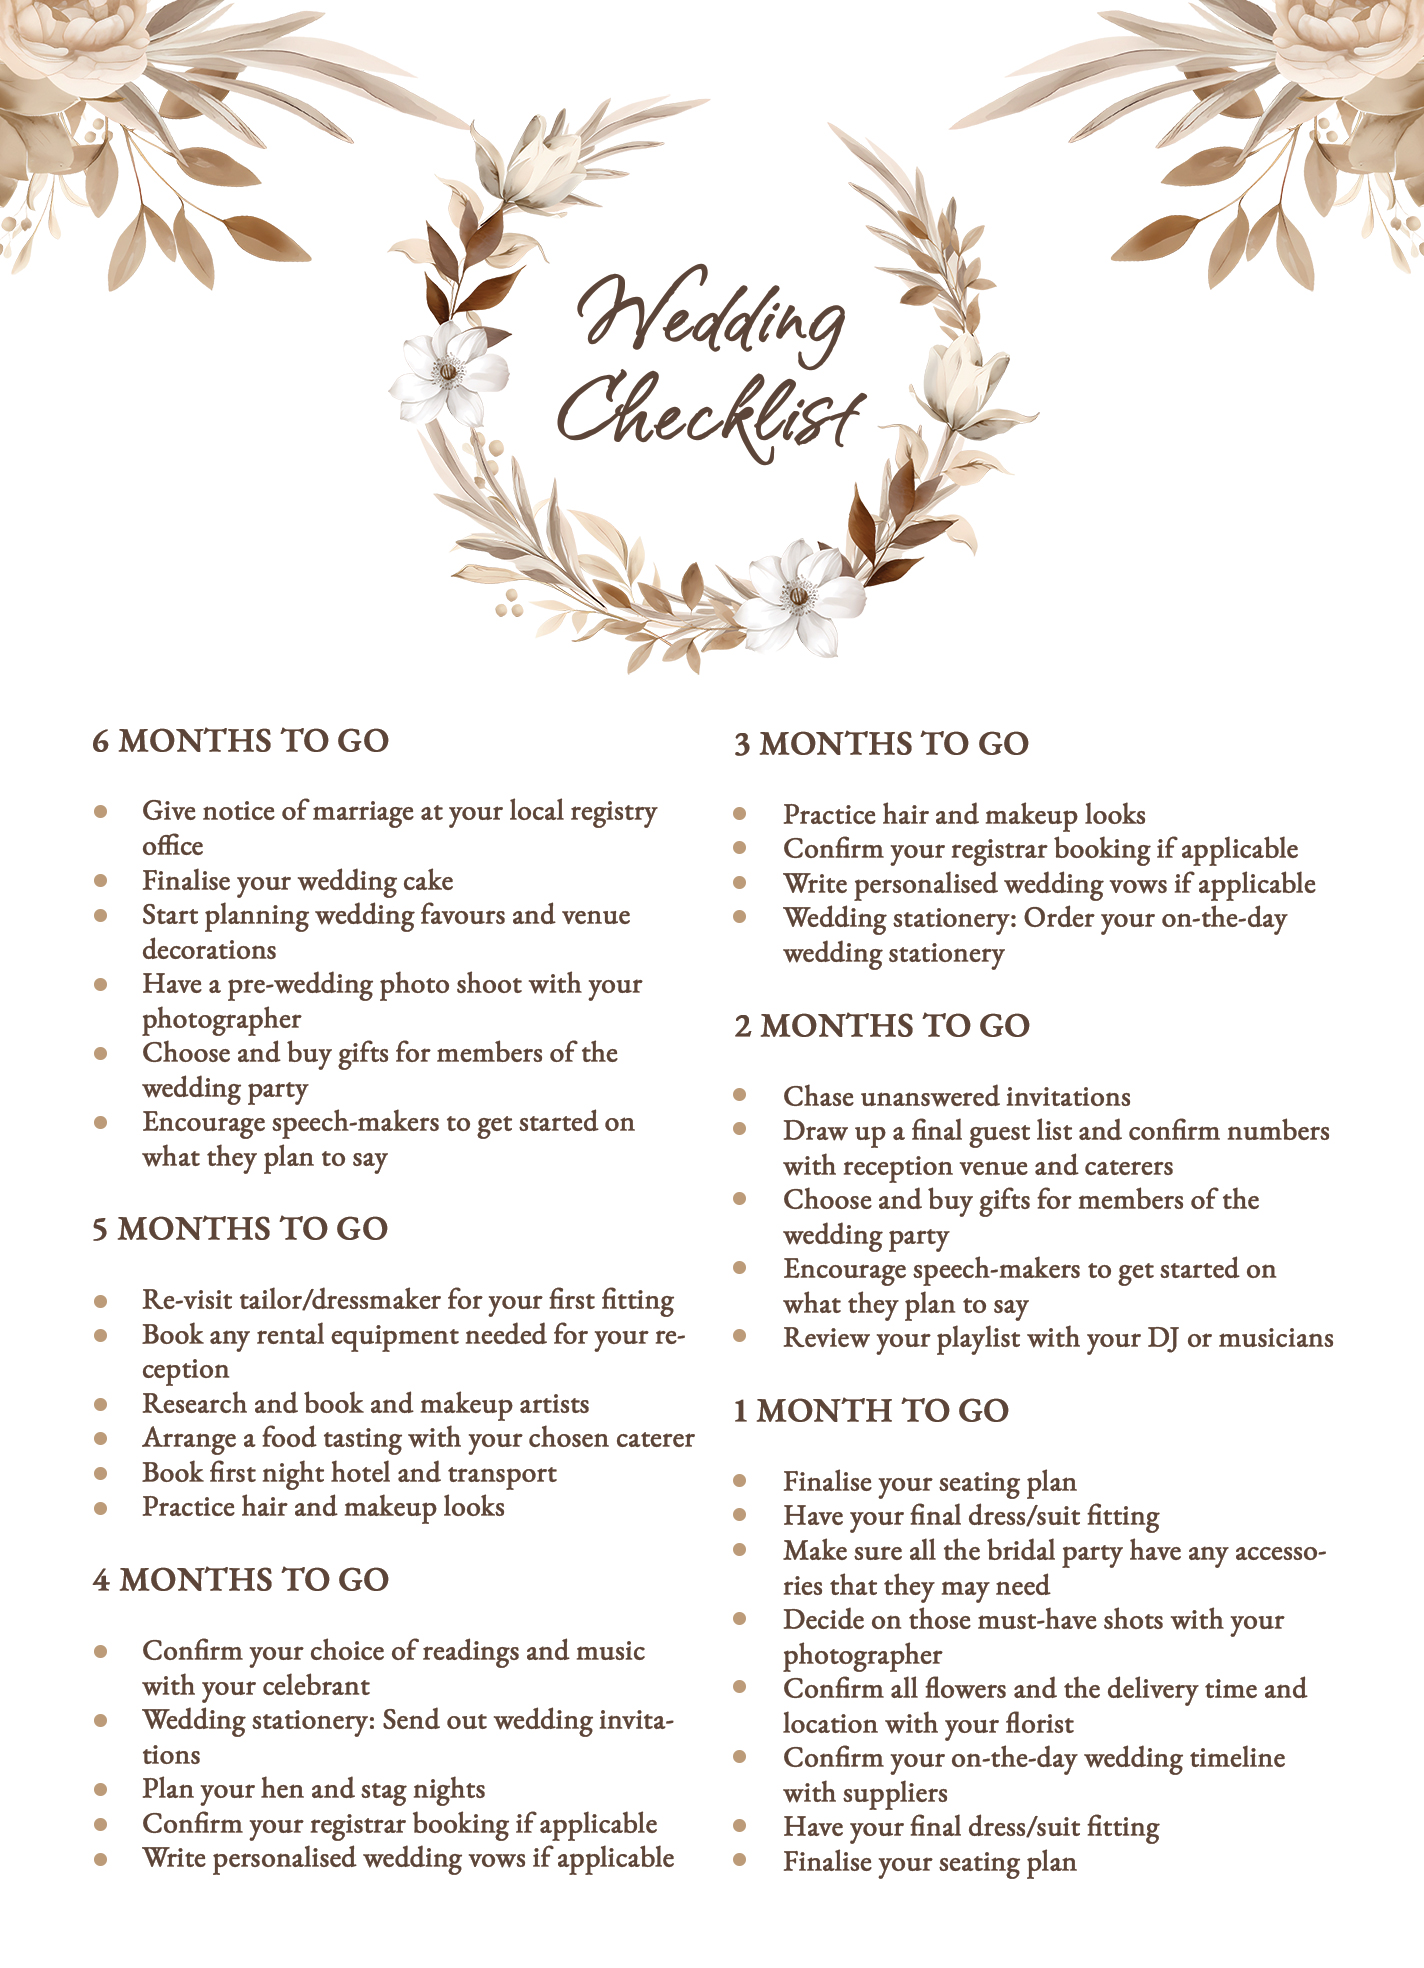 wedding checklist image